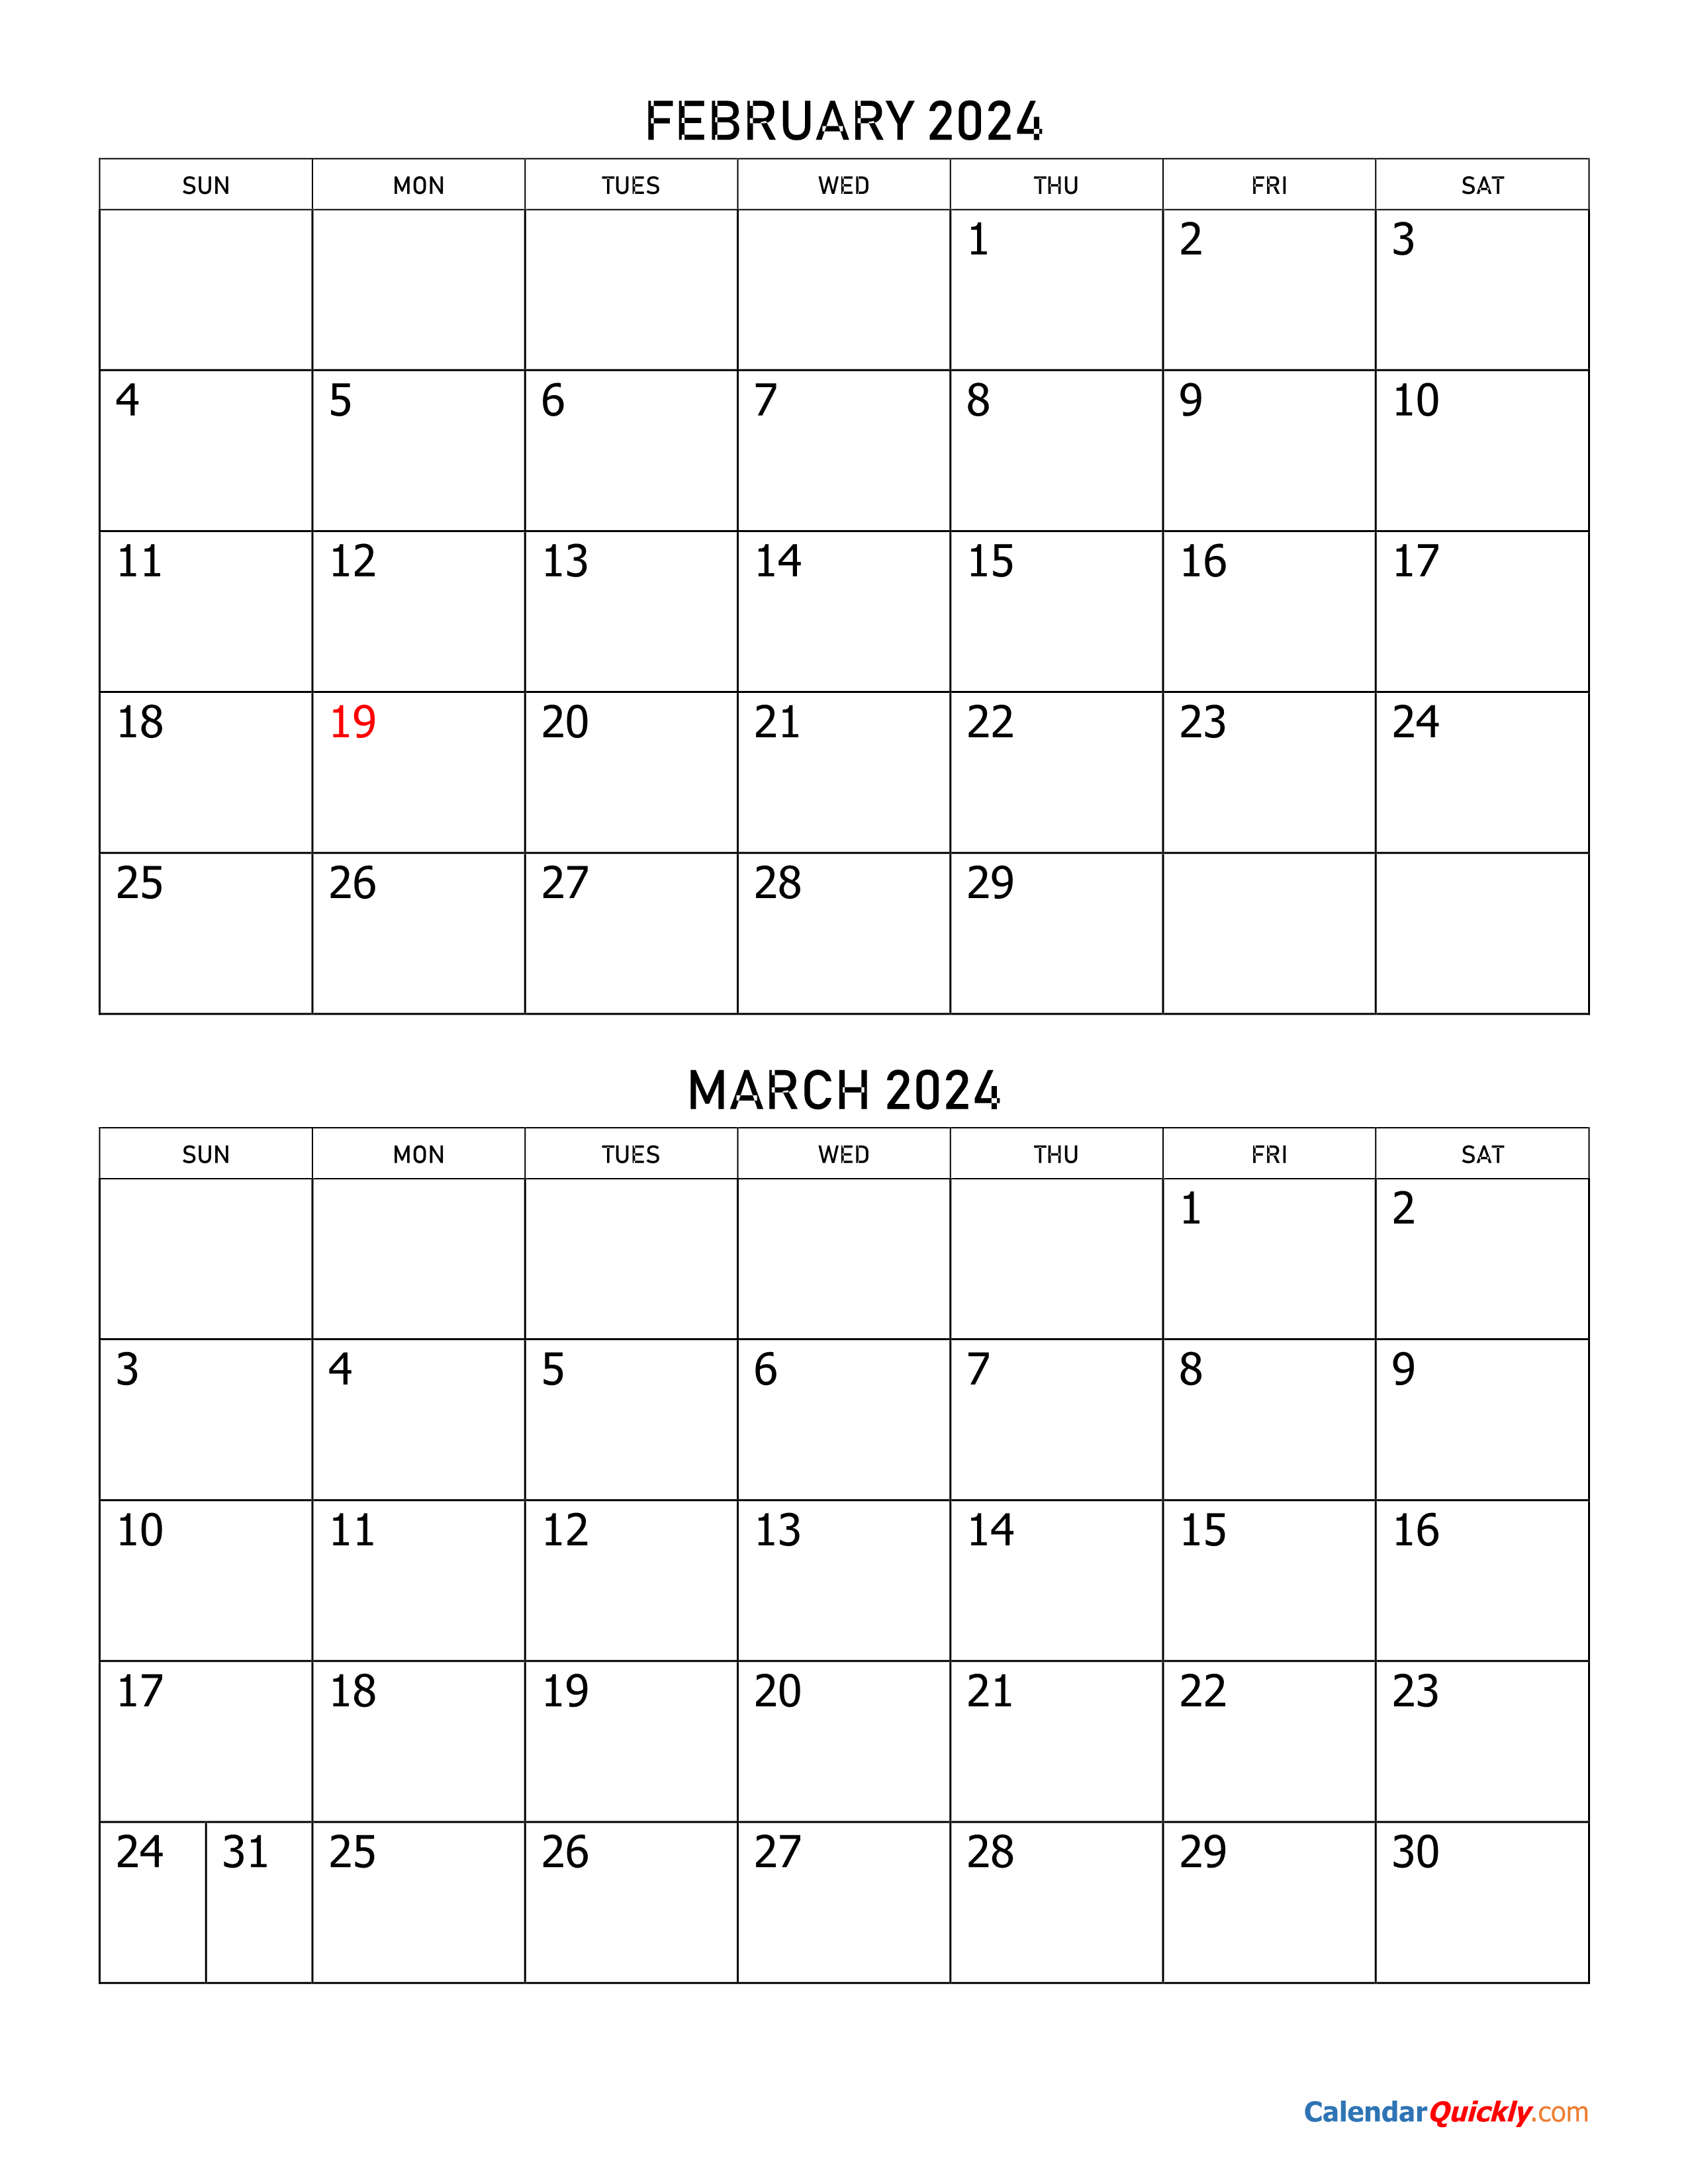 February and March 2024 Calendar | Calendar Quickly